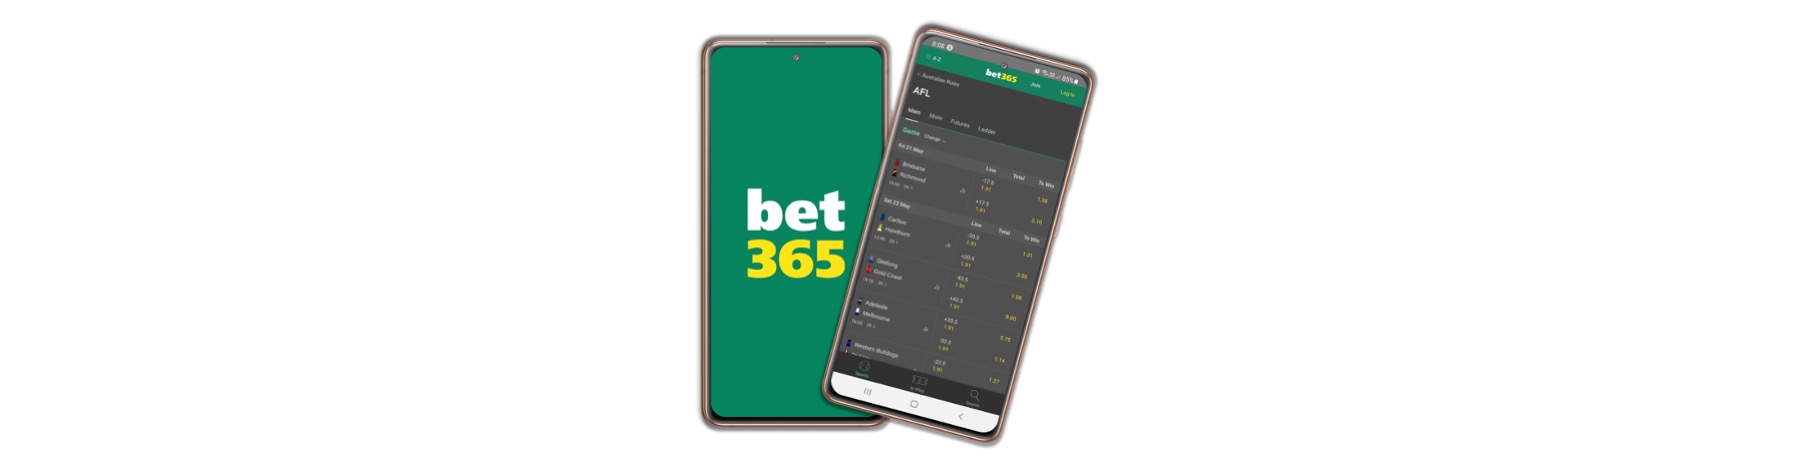 Bet365 Betting App